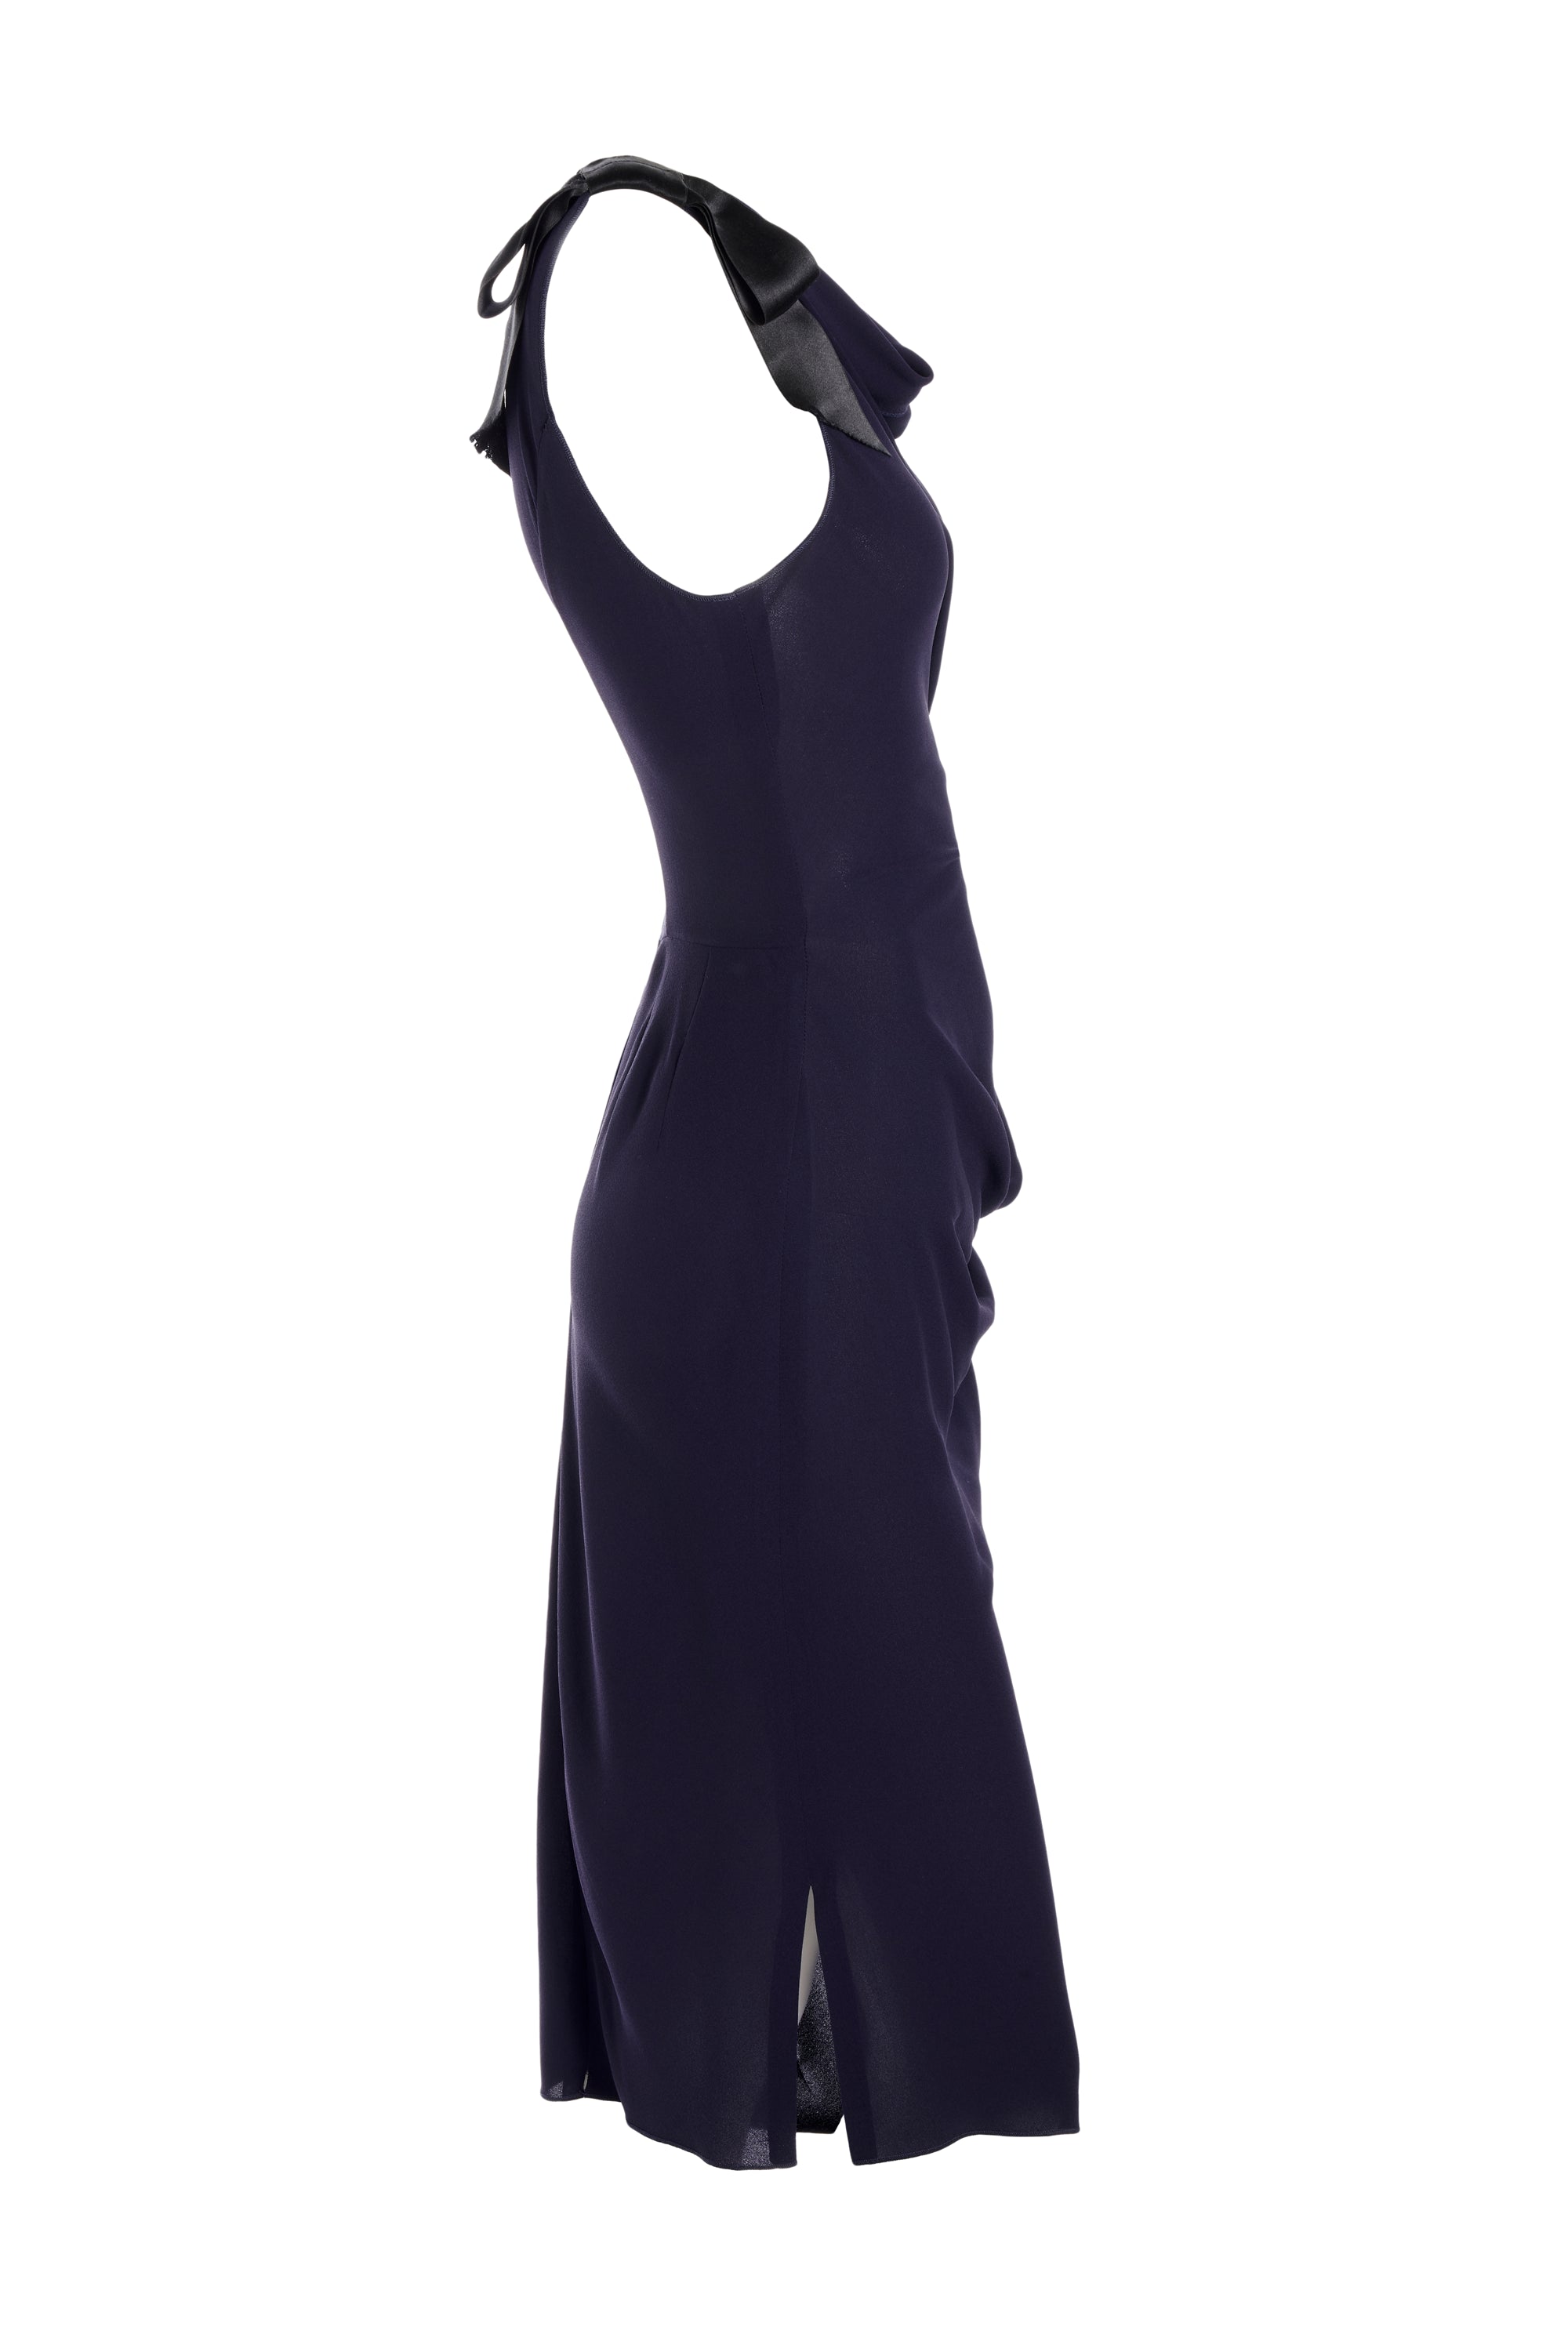 Nina Ricci Navy and Black Silk Dress Size 38 - Foxy Couture Carmel